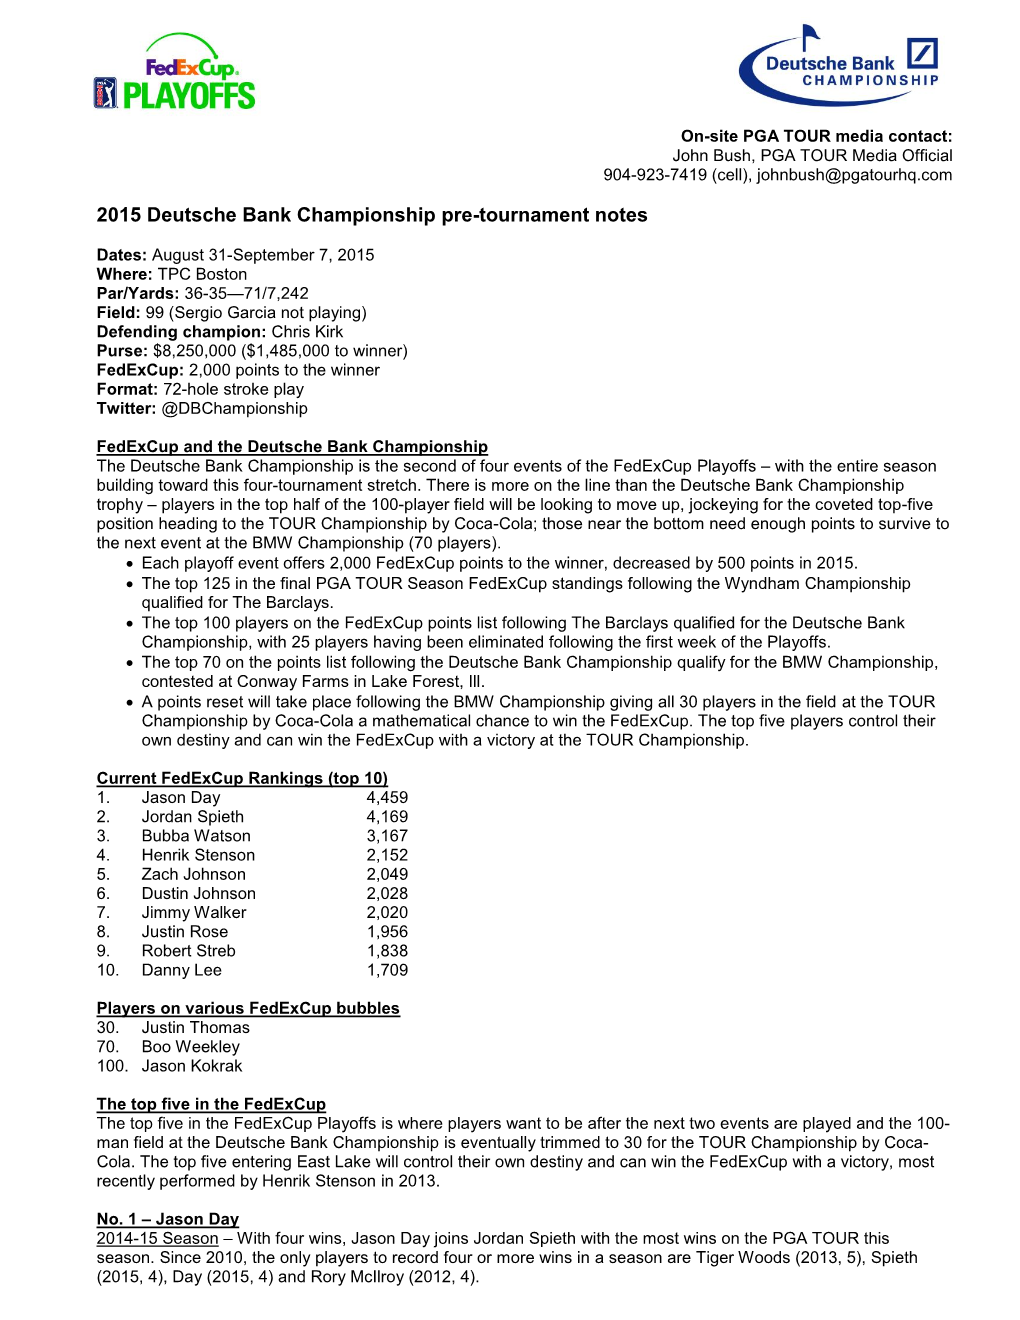 2015 Deutsche Bank Championship Pre-Tournament Notes